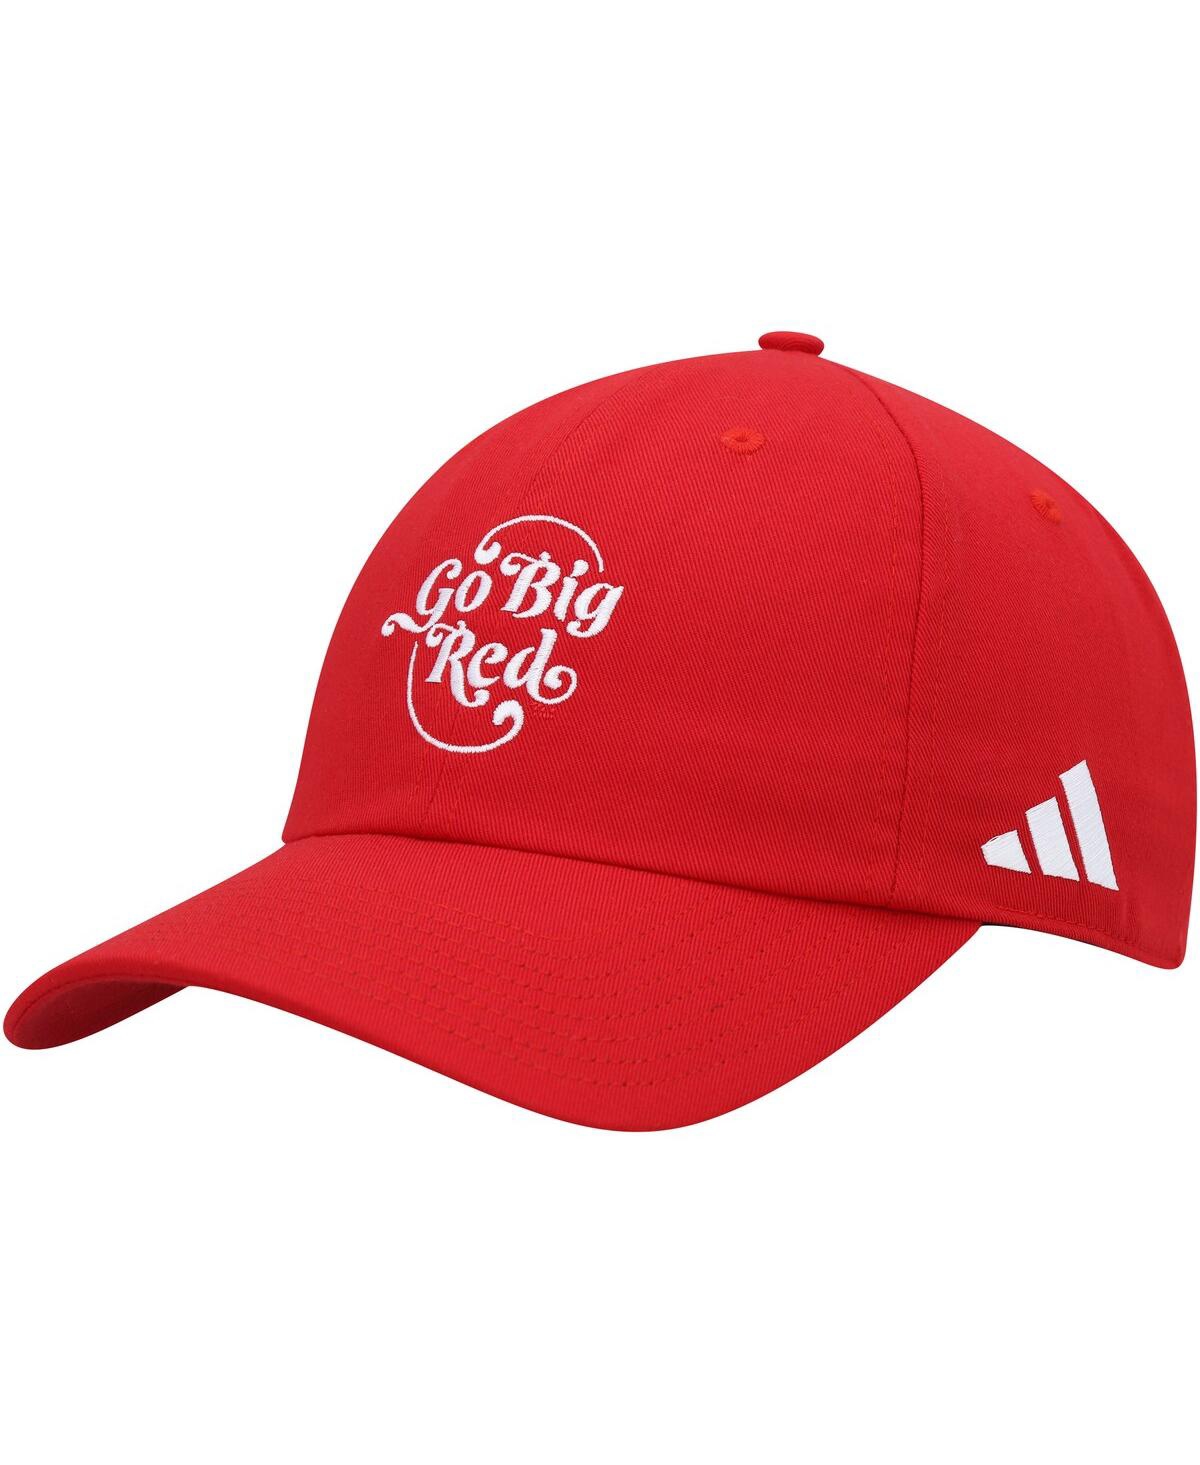 Shop Adidas Originals Men's Adidas Scarlet Nebraska Huskers Slouch Adjustable Hat